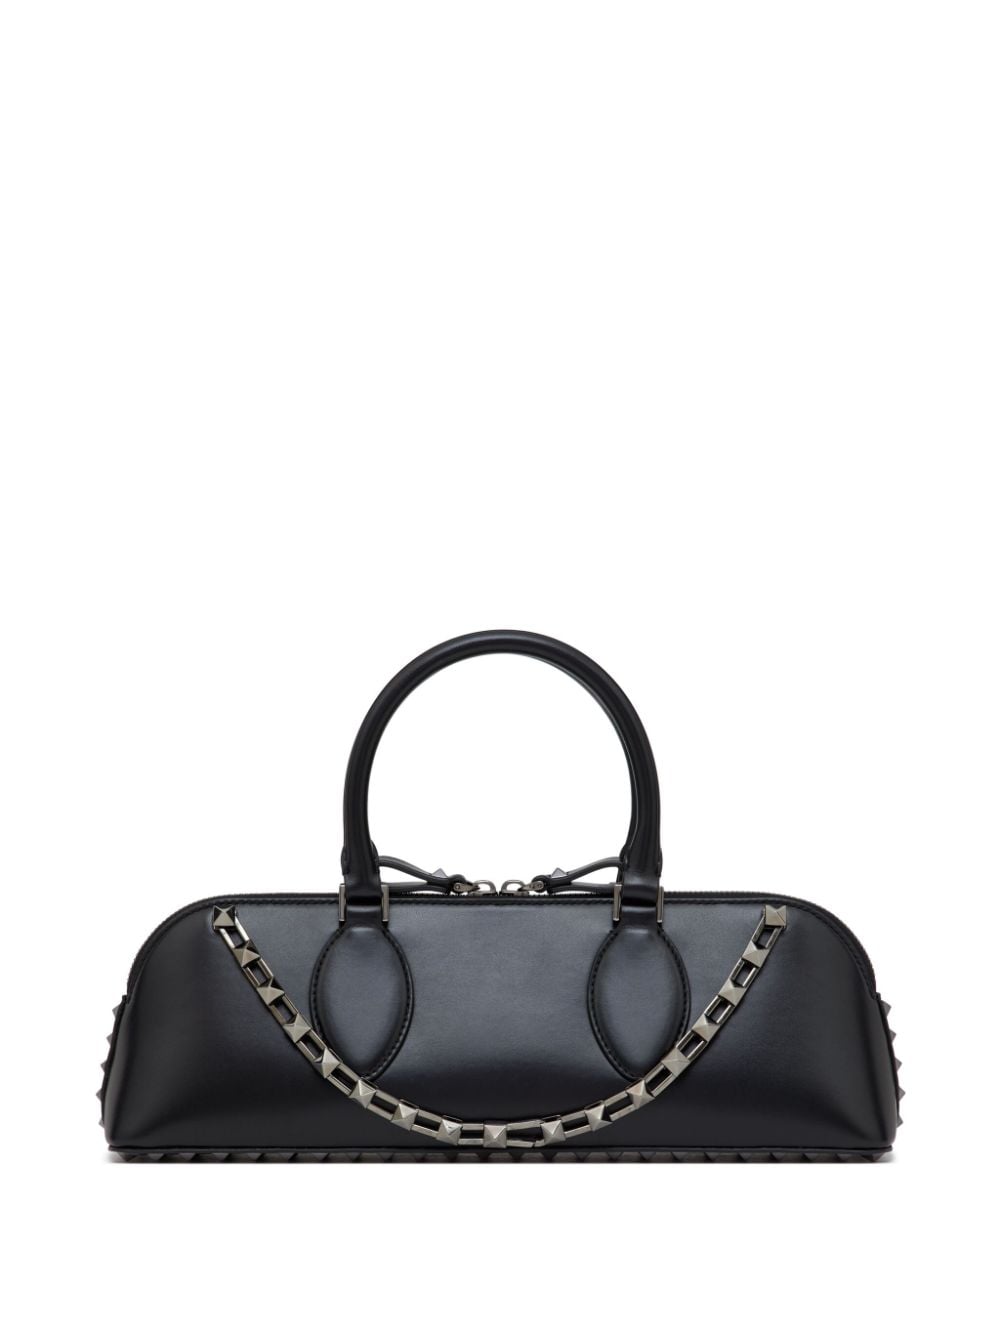 Image 1 of Valentino Garavani Rockstud E/W leather handbag